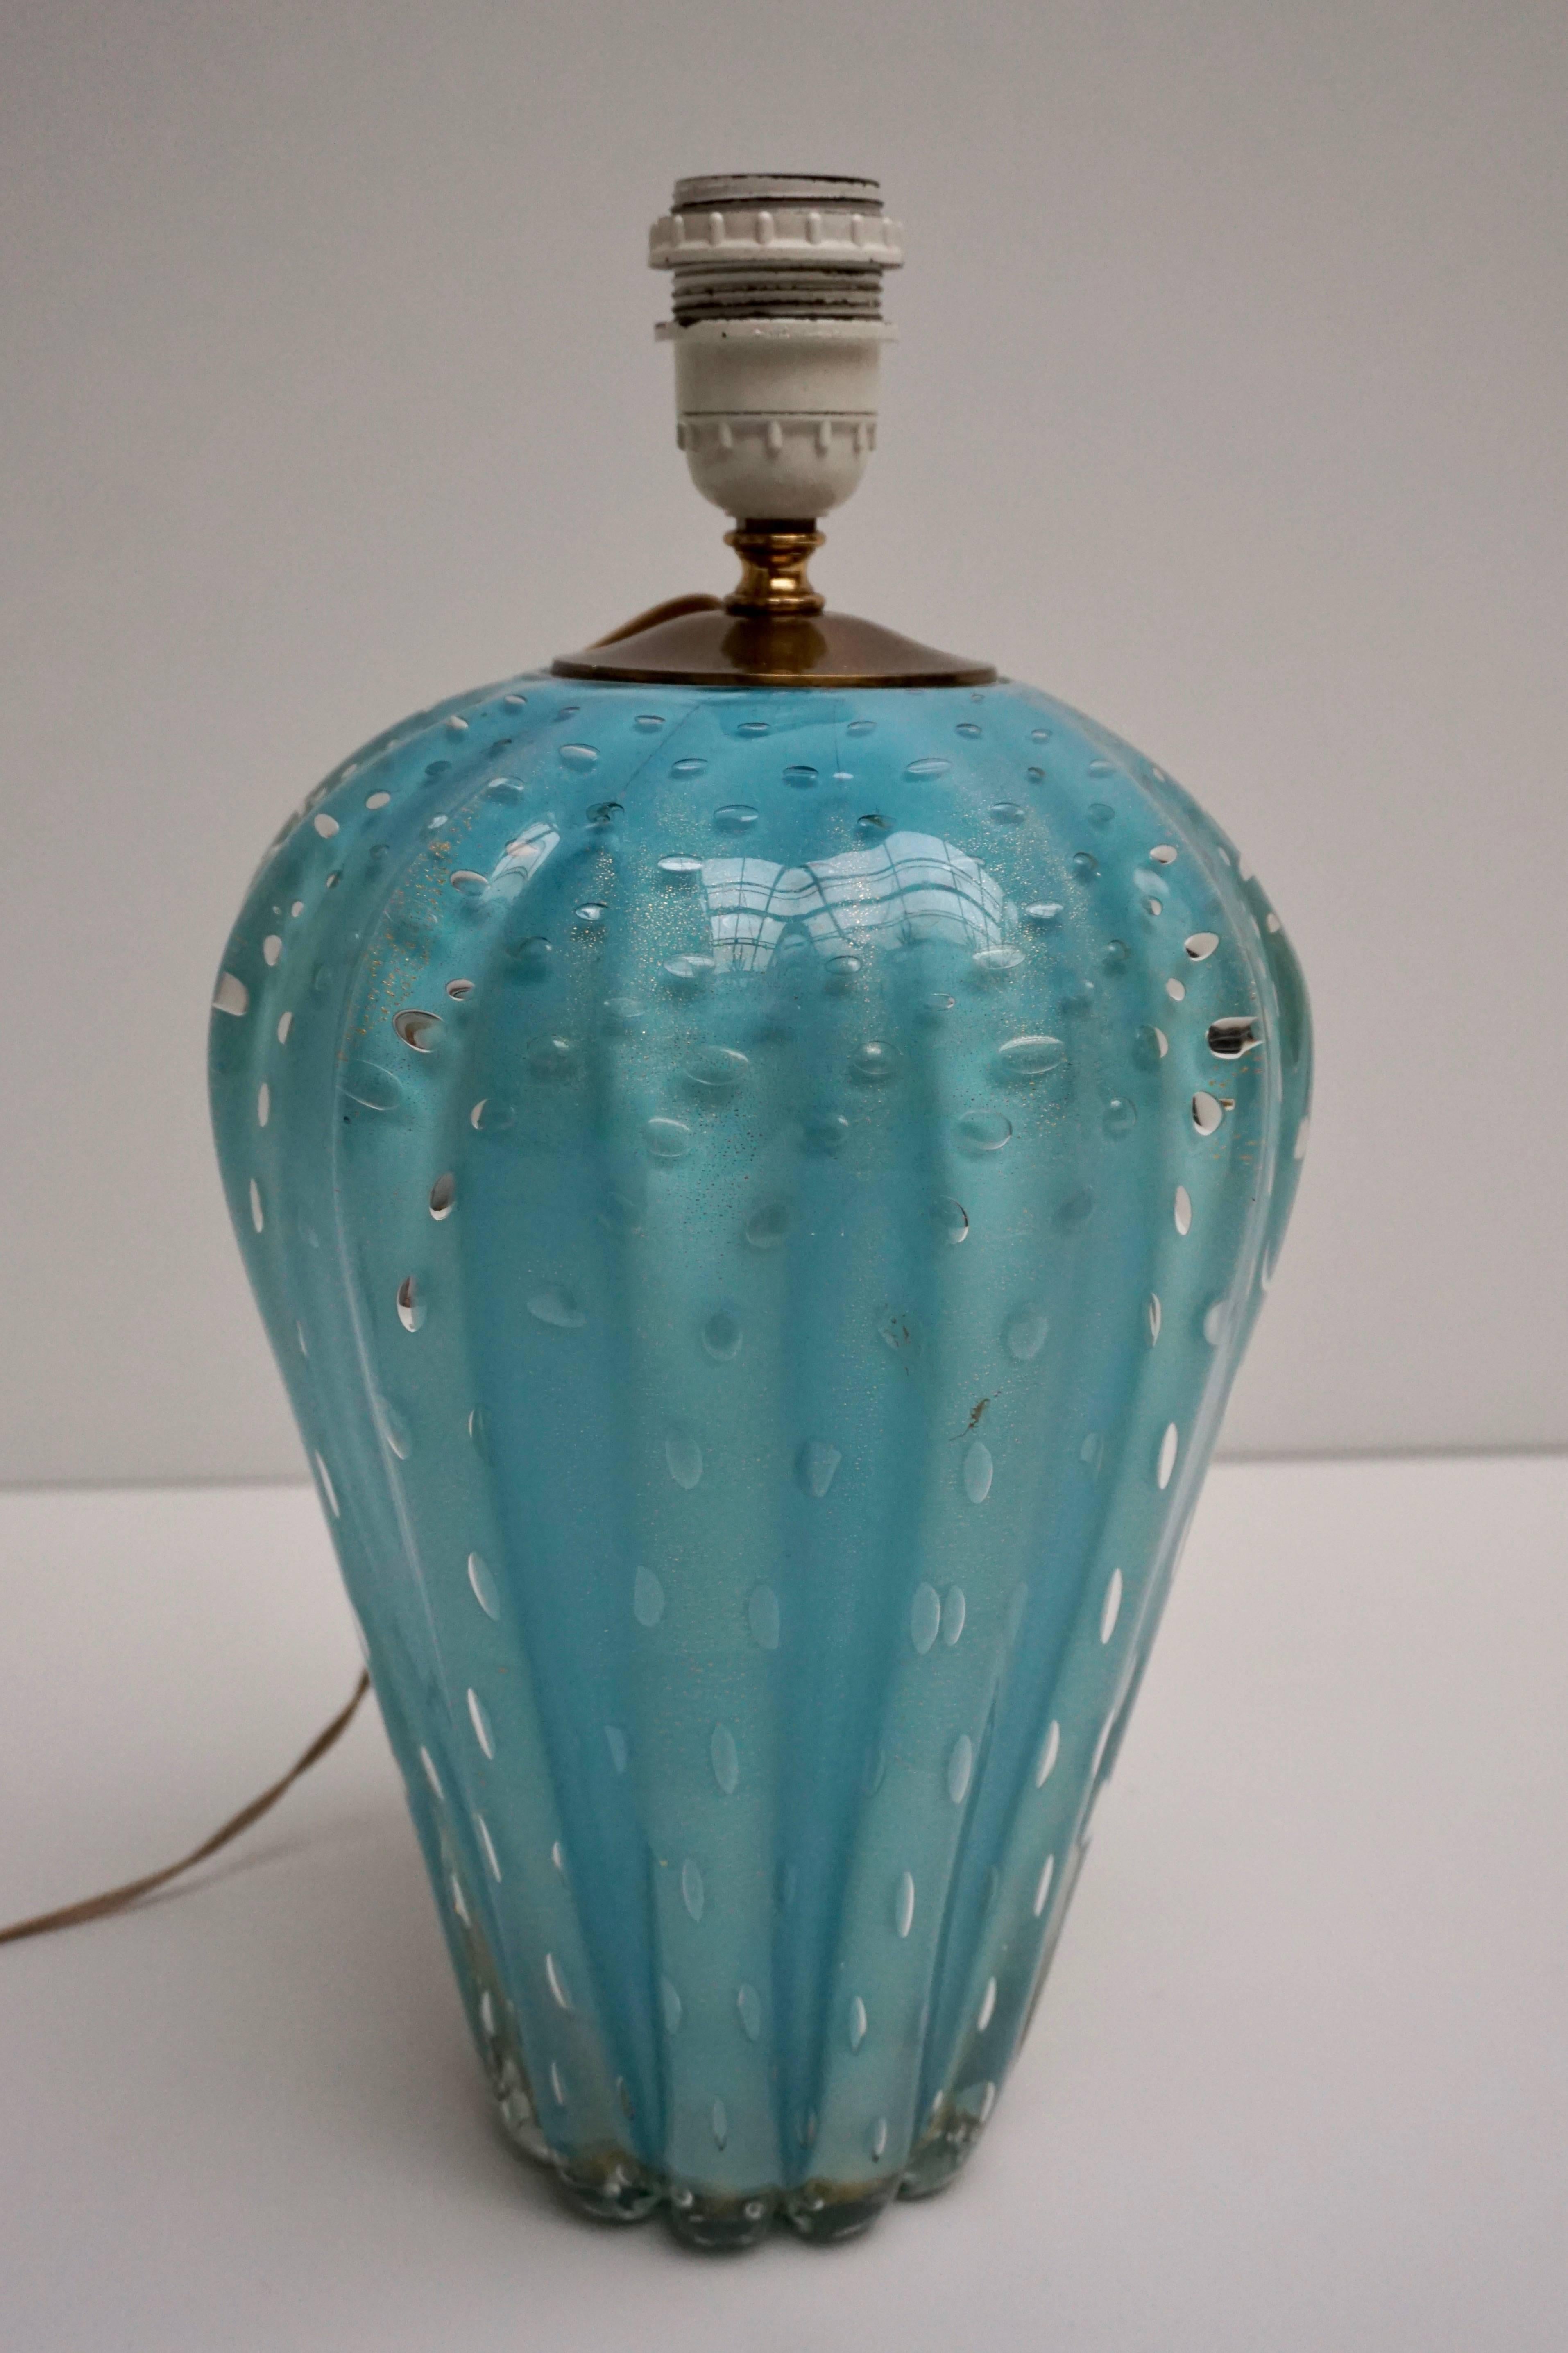 Italian Murano Glass Table Lamp